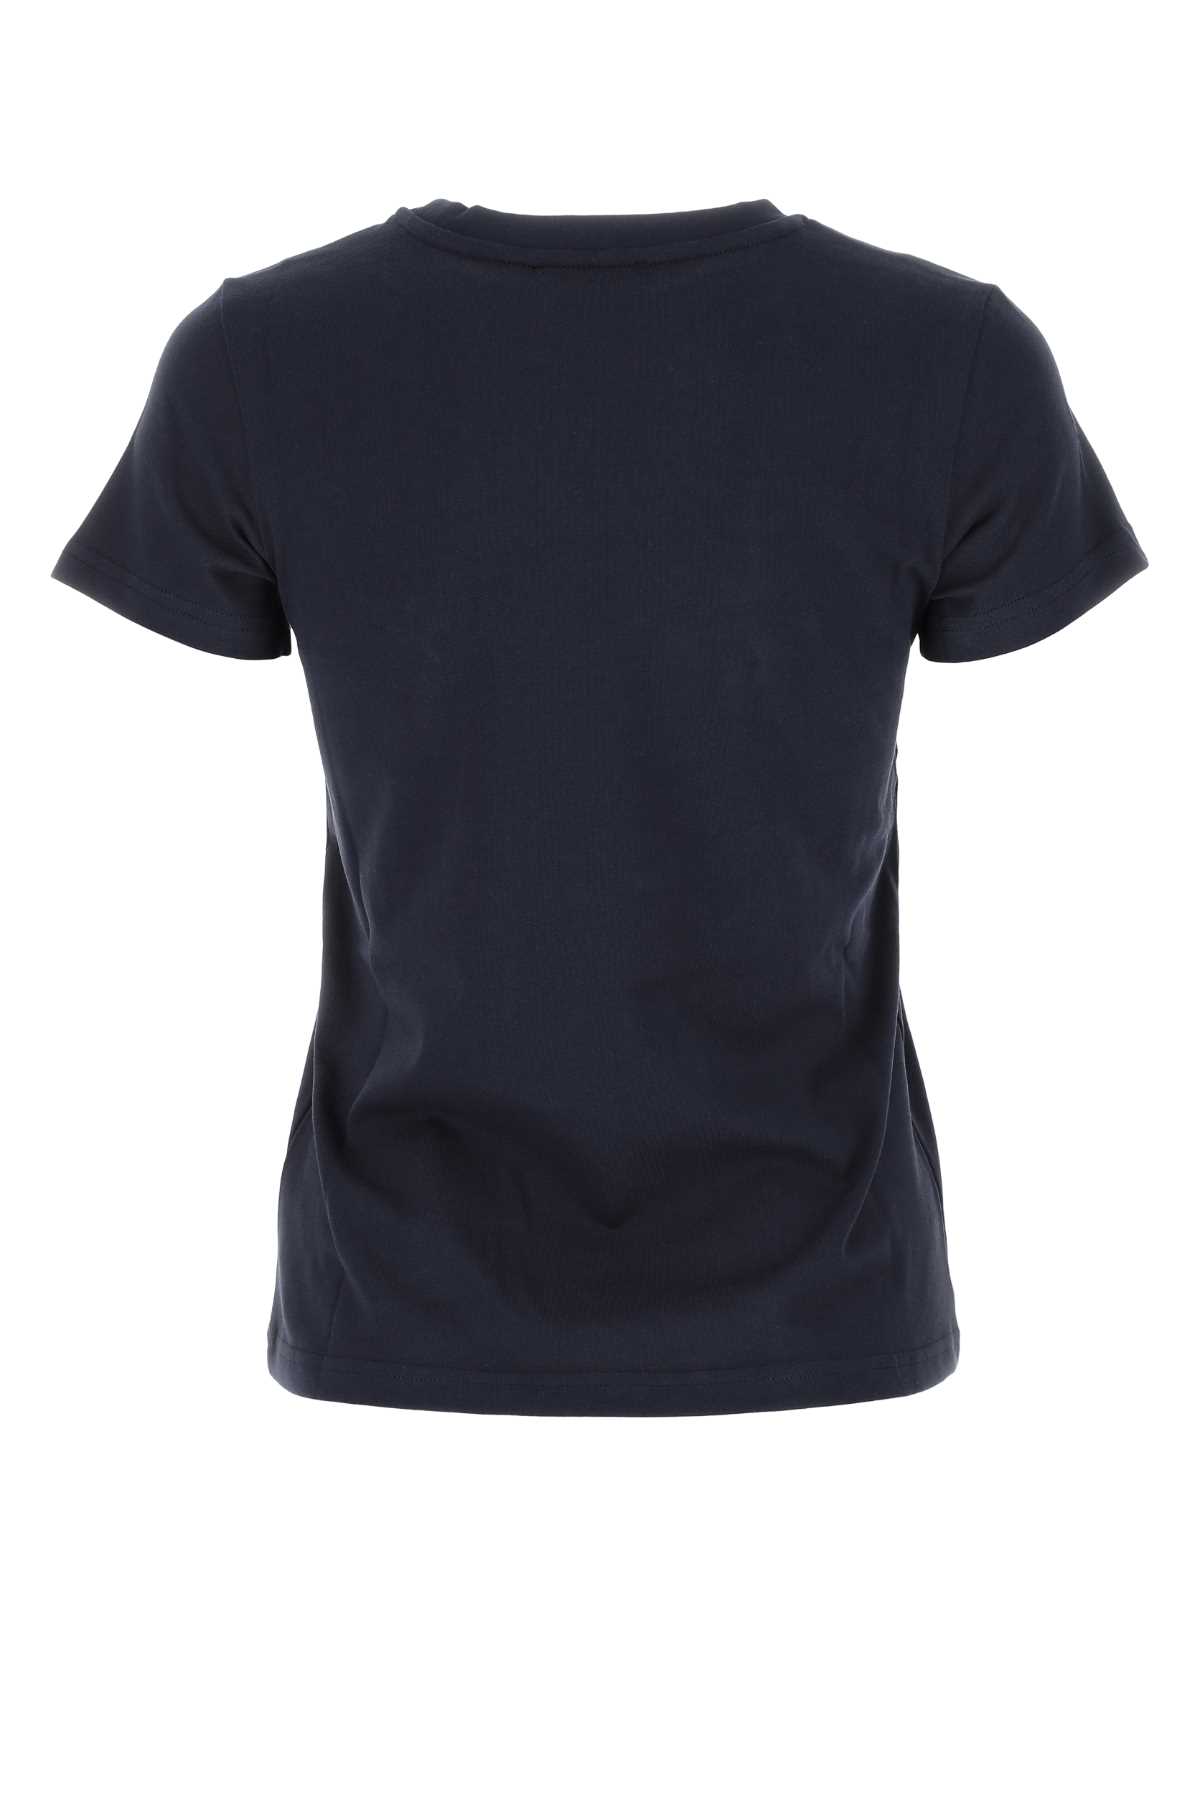 Apc Dark Blue Cotton T-shirt